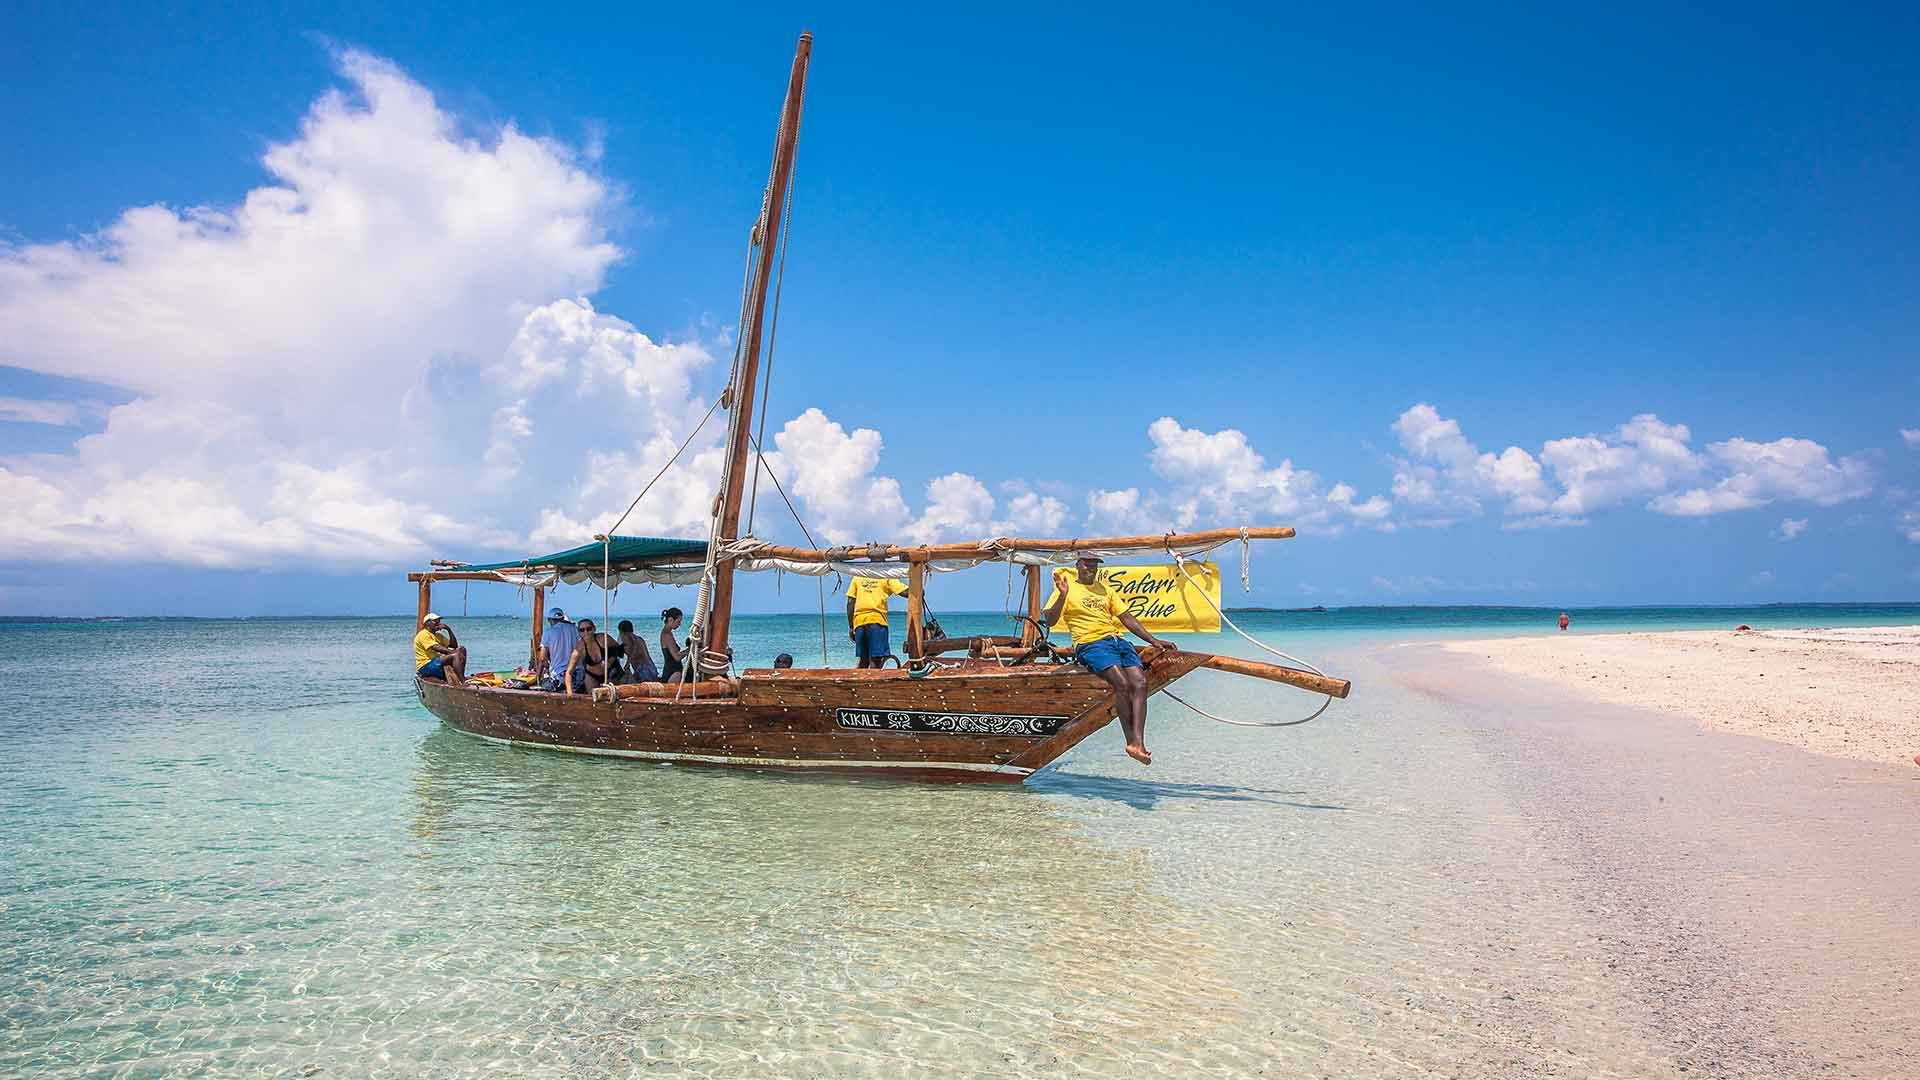 Safari Blue Zanzibar - amazing day sailing tours on traditional Dhows